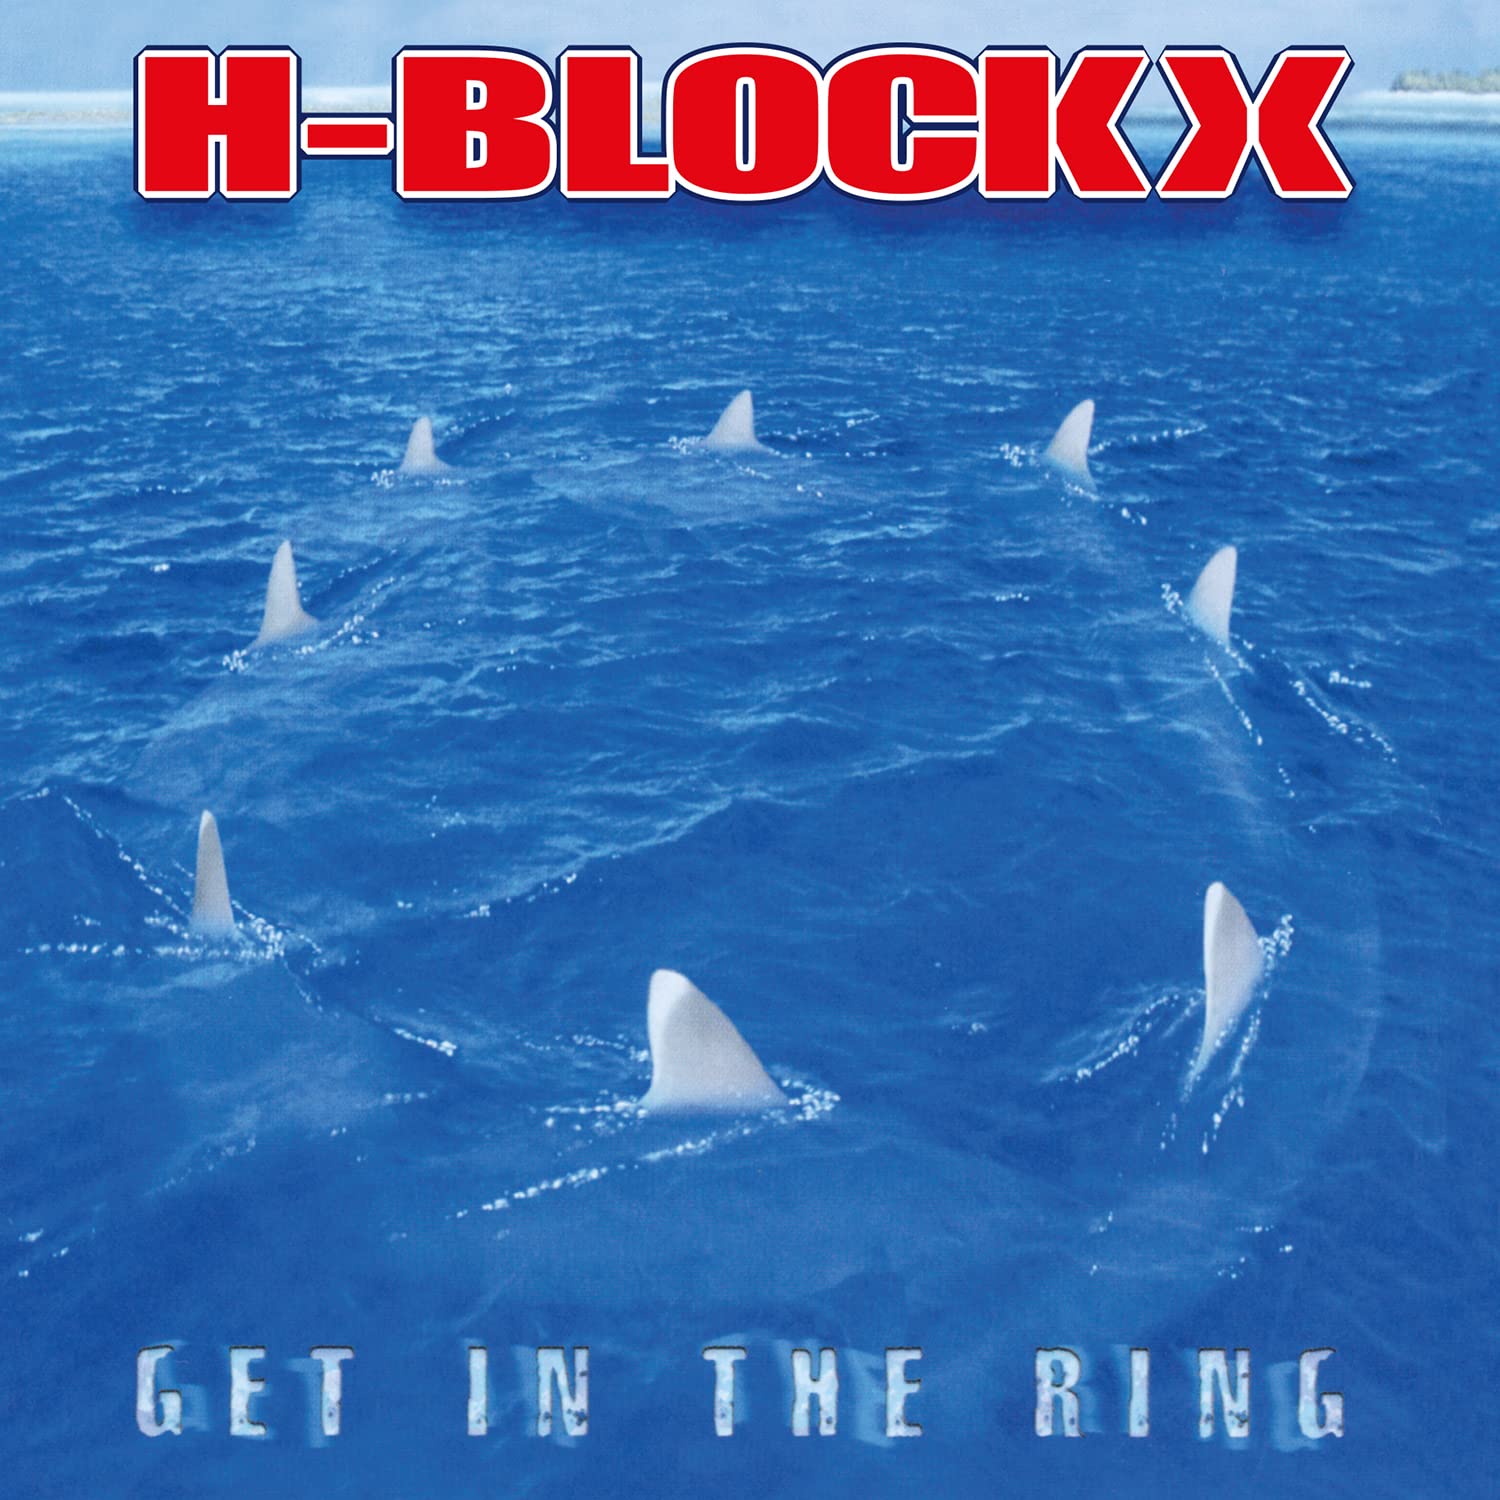 H blockx power. H-Blockx get in the Ring. H-Blockx get in the Ring обложка. H-Blockx, Turbo b. - the Power русская версия. H-Blockx альбомы.